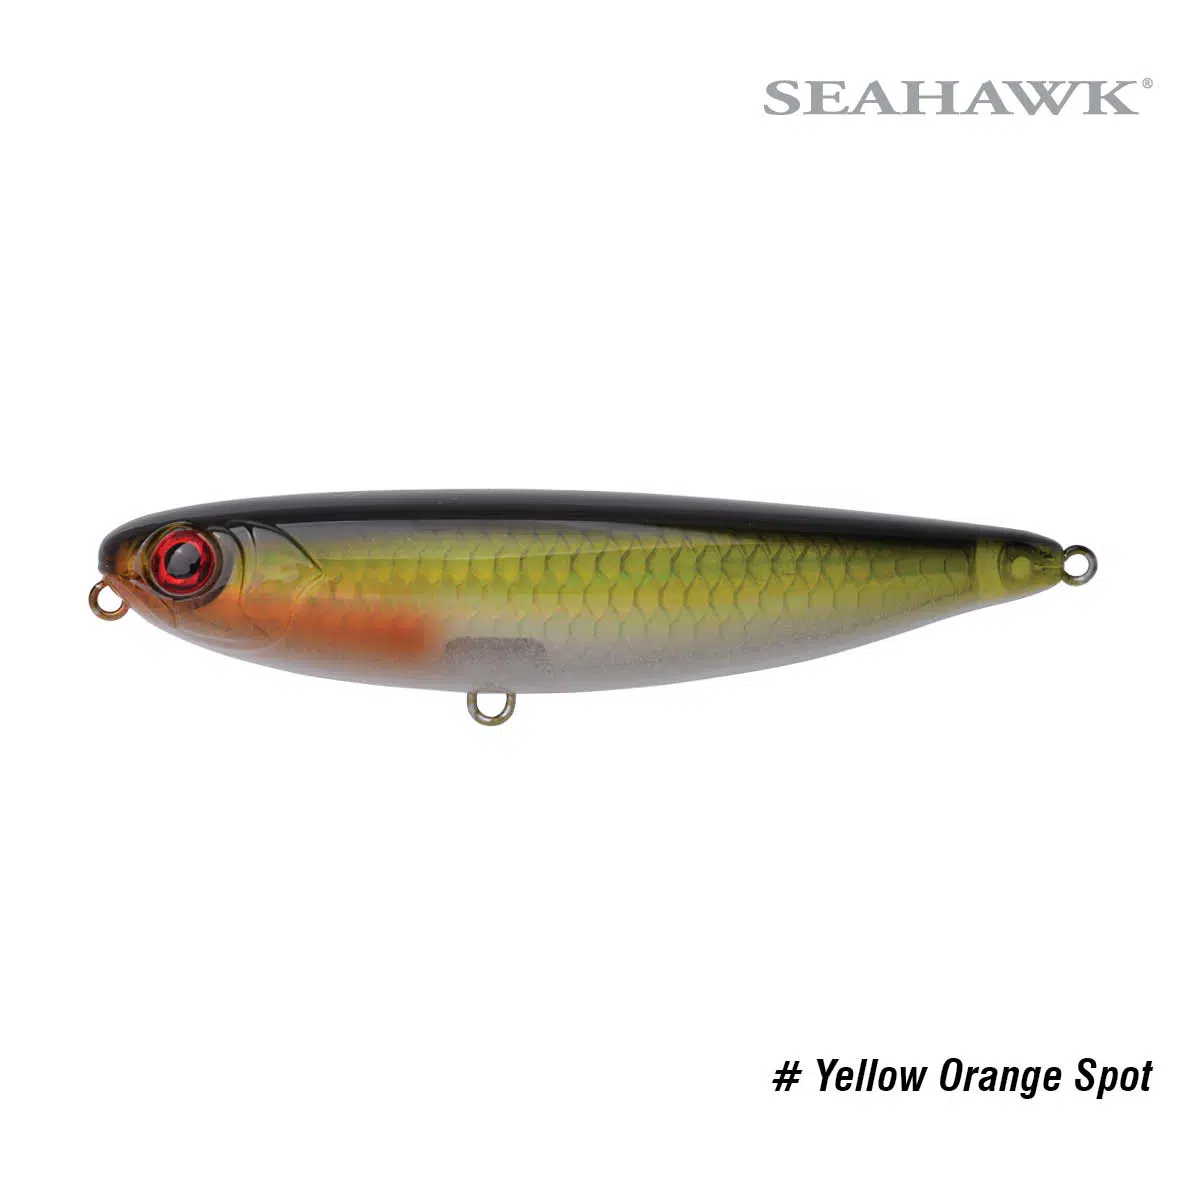 https://seahawkfishing.com/wp-content/uploads/2021/10/Seahawk-Barra-Spook-Yellow-Orange-Spot.jpg.webp